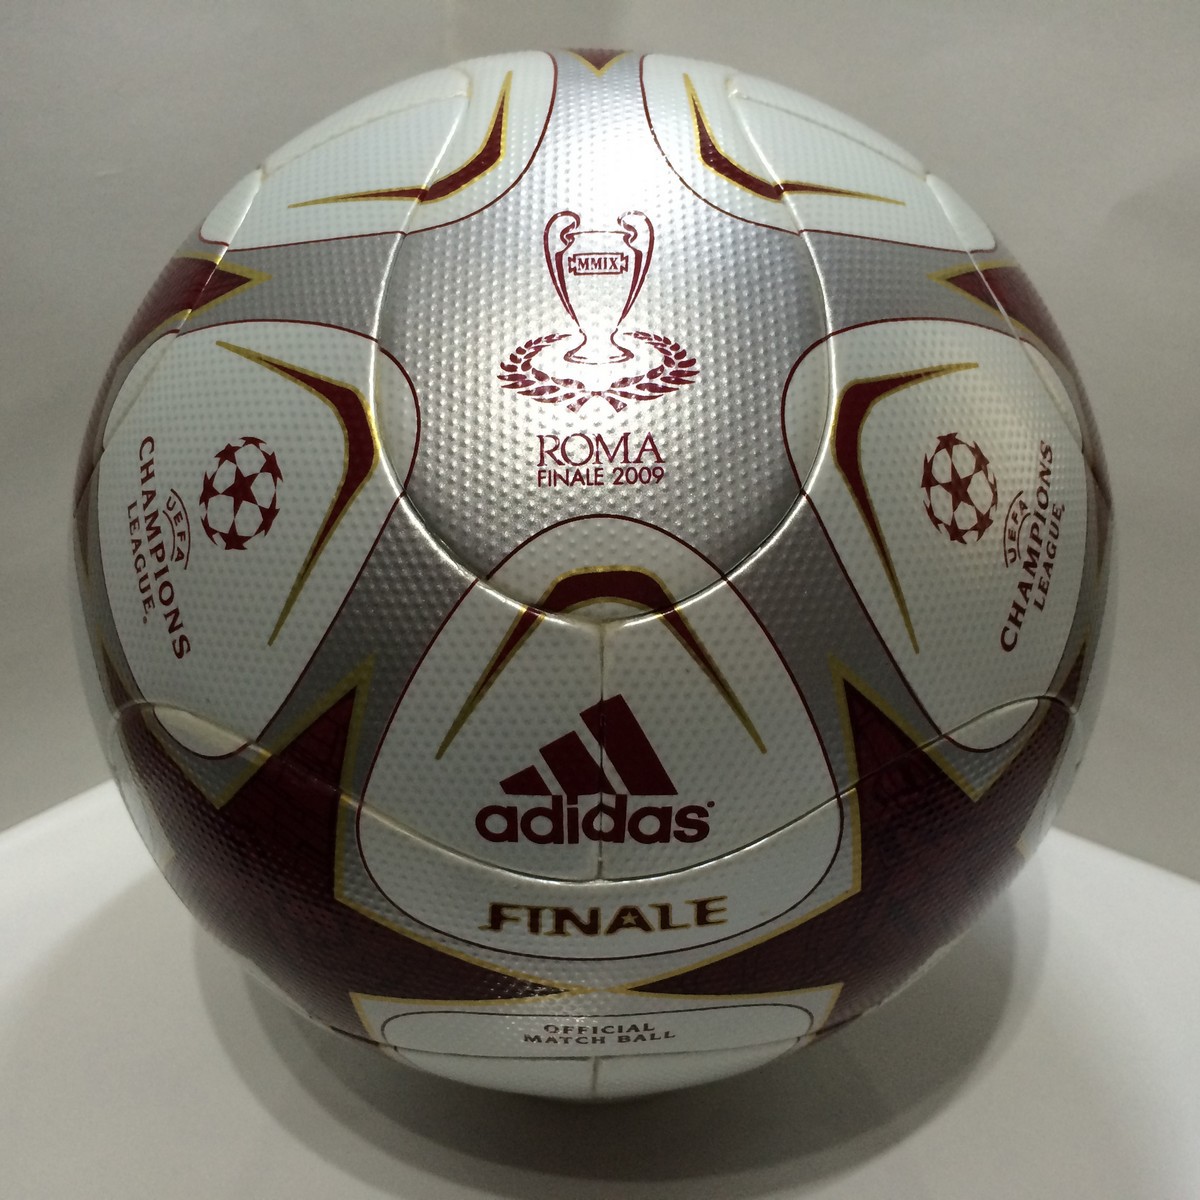 Adidas Jo'bulani final Soccer Match ball UEFA South Africa World Cup 2010  BALL